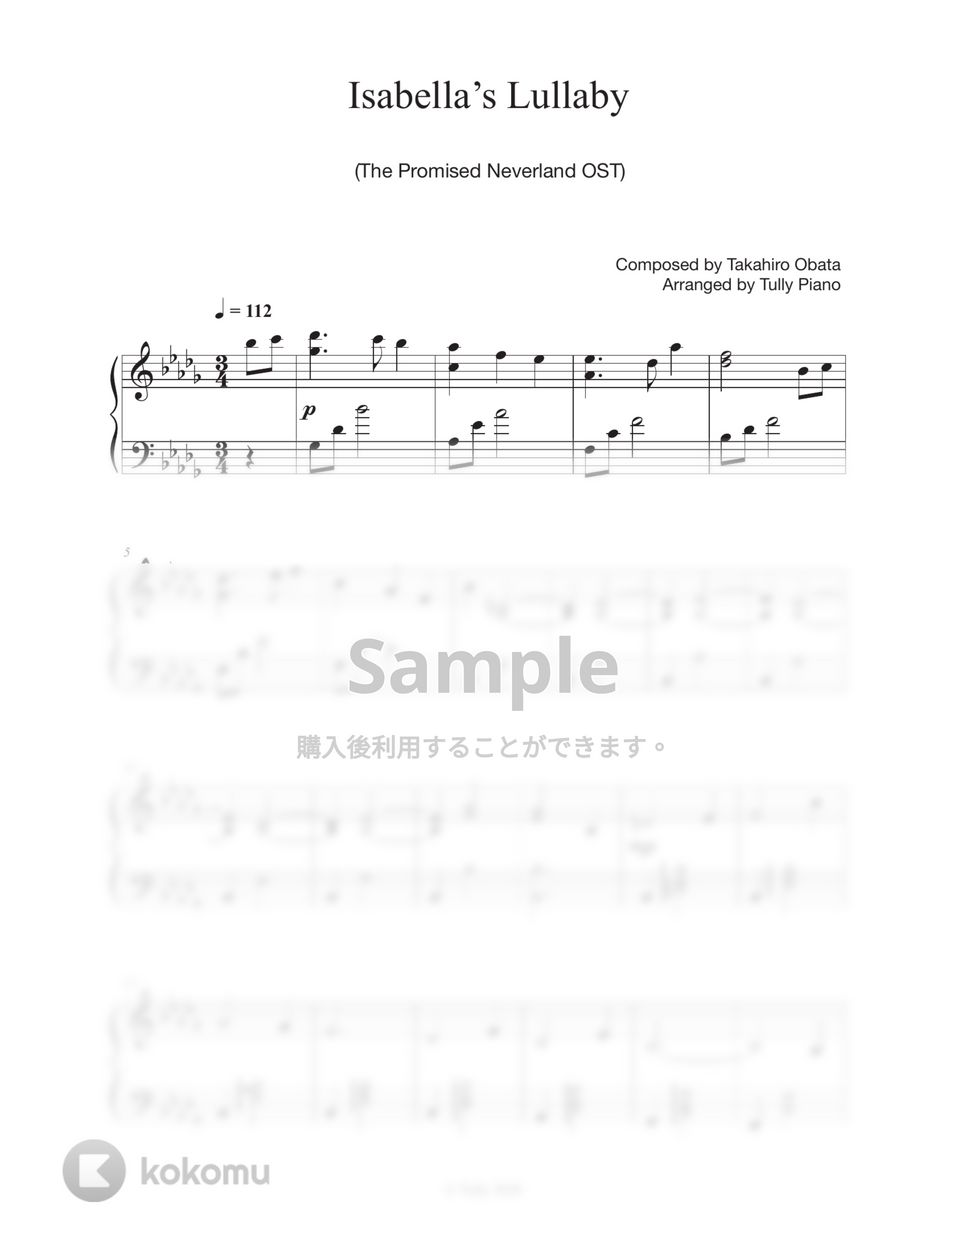 The Promised Neverland (OST) (約束のネバーランド) lyrics with